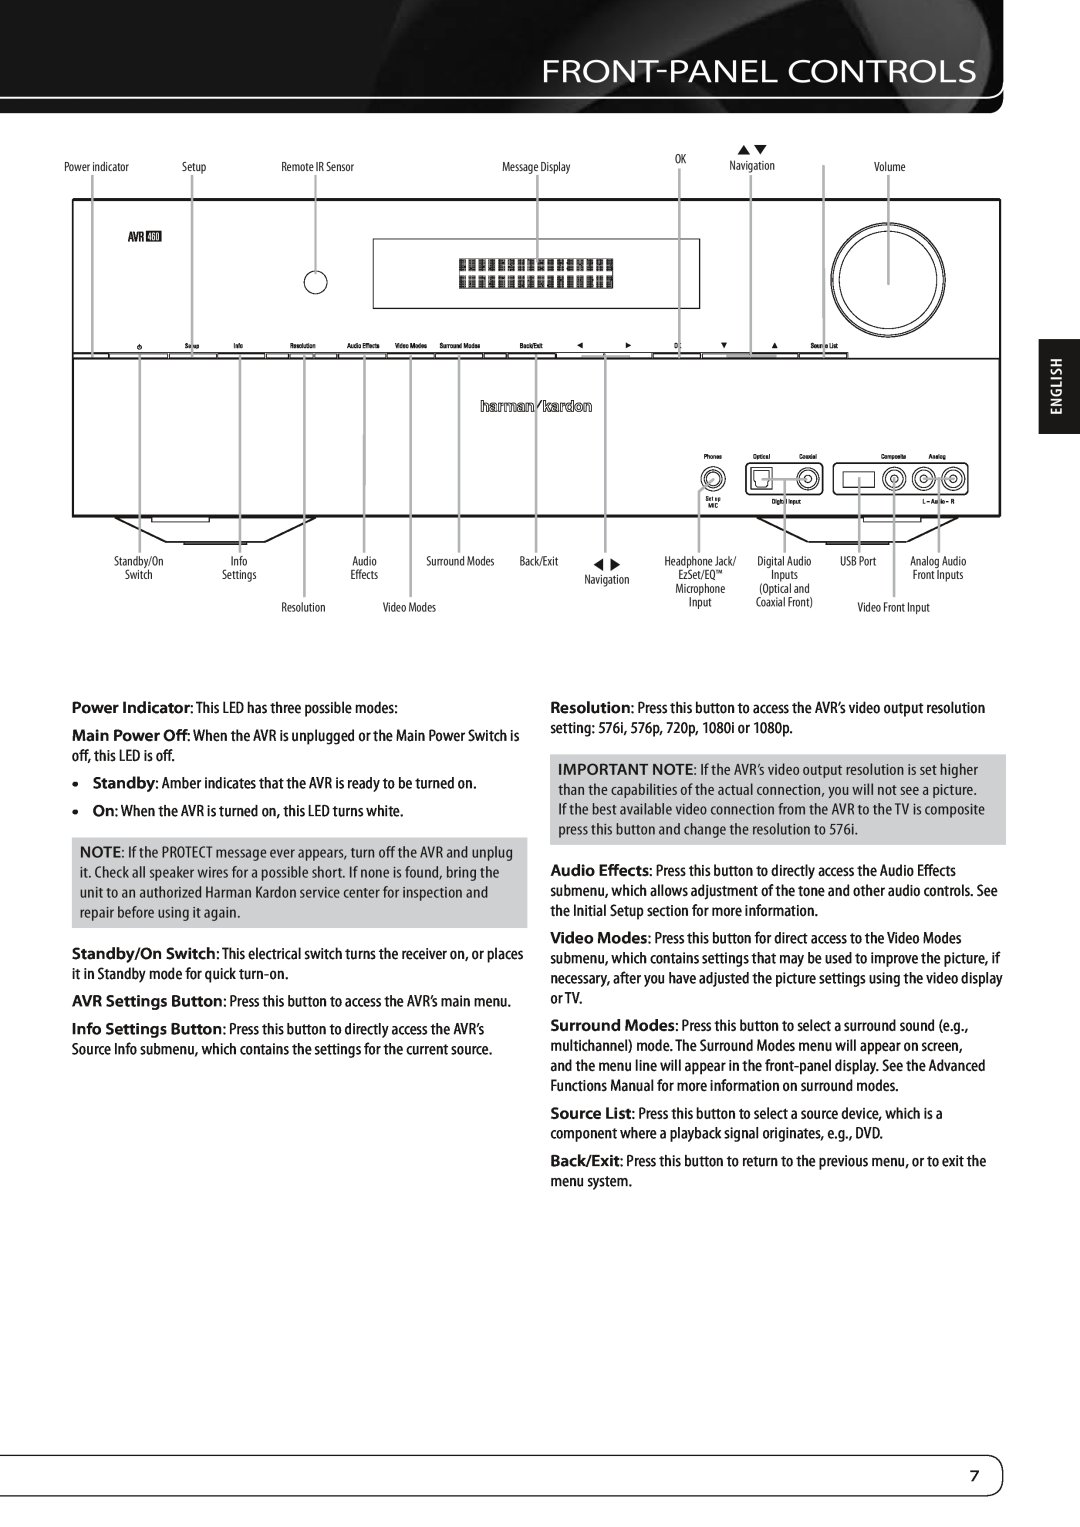 Harman-Kardon AVR360 owner manual Front-Panelcontrols, English 